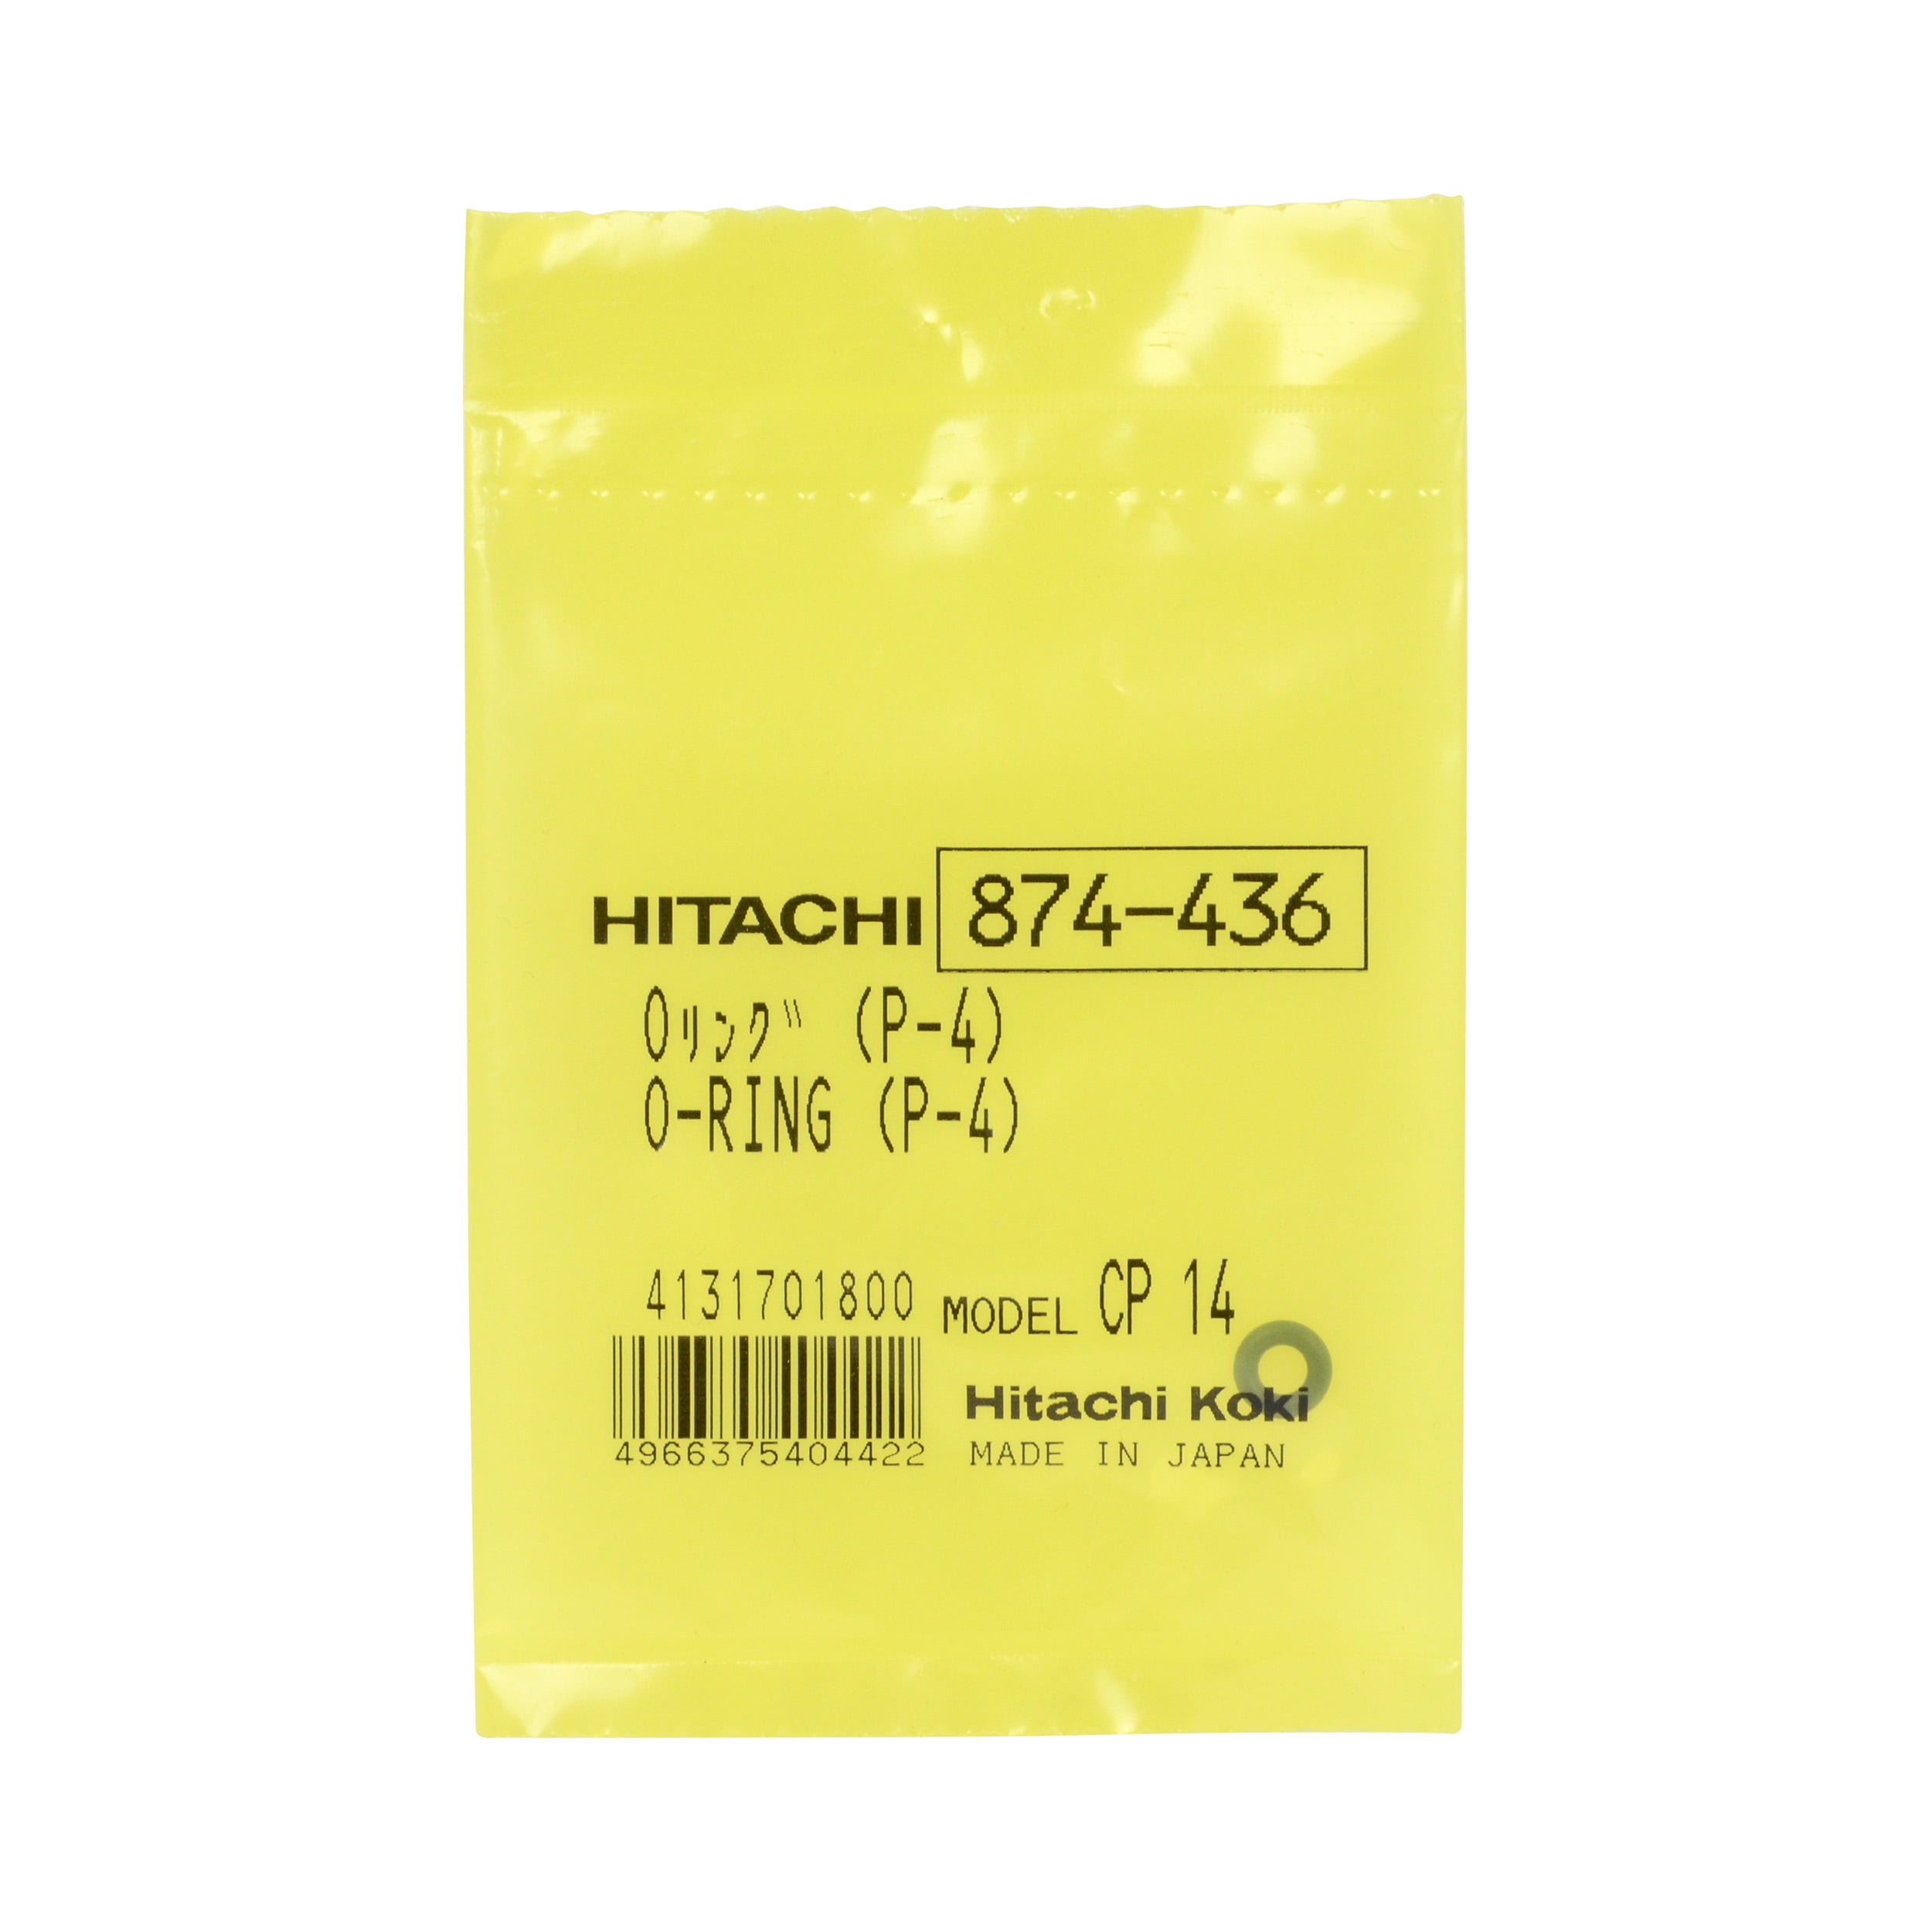 # 881760 Hitachi NV65AH Genuine OEM Rubber Head Valve A 